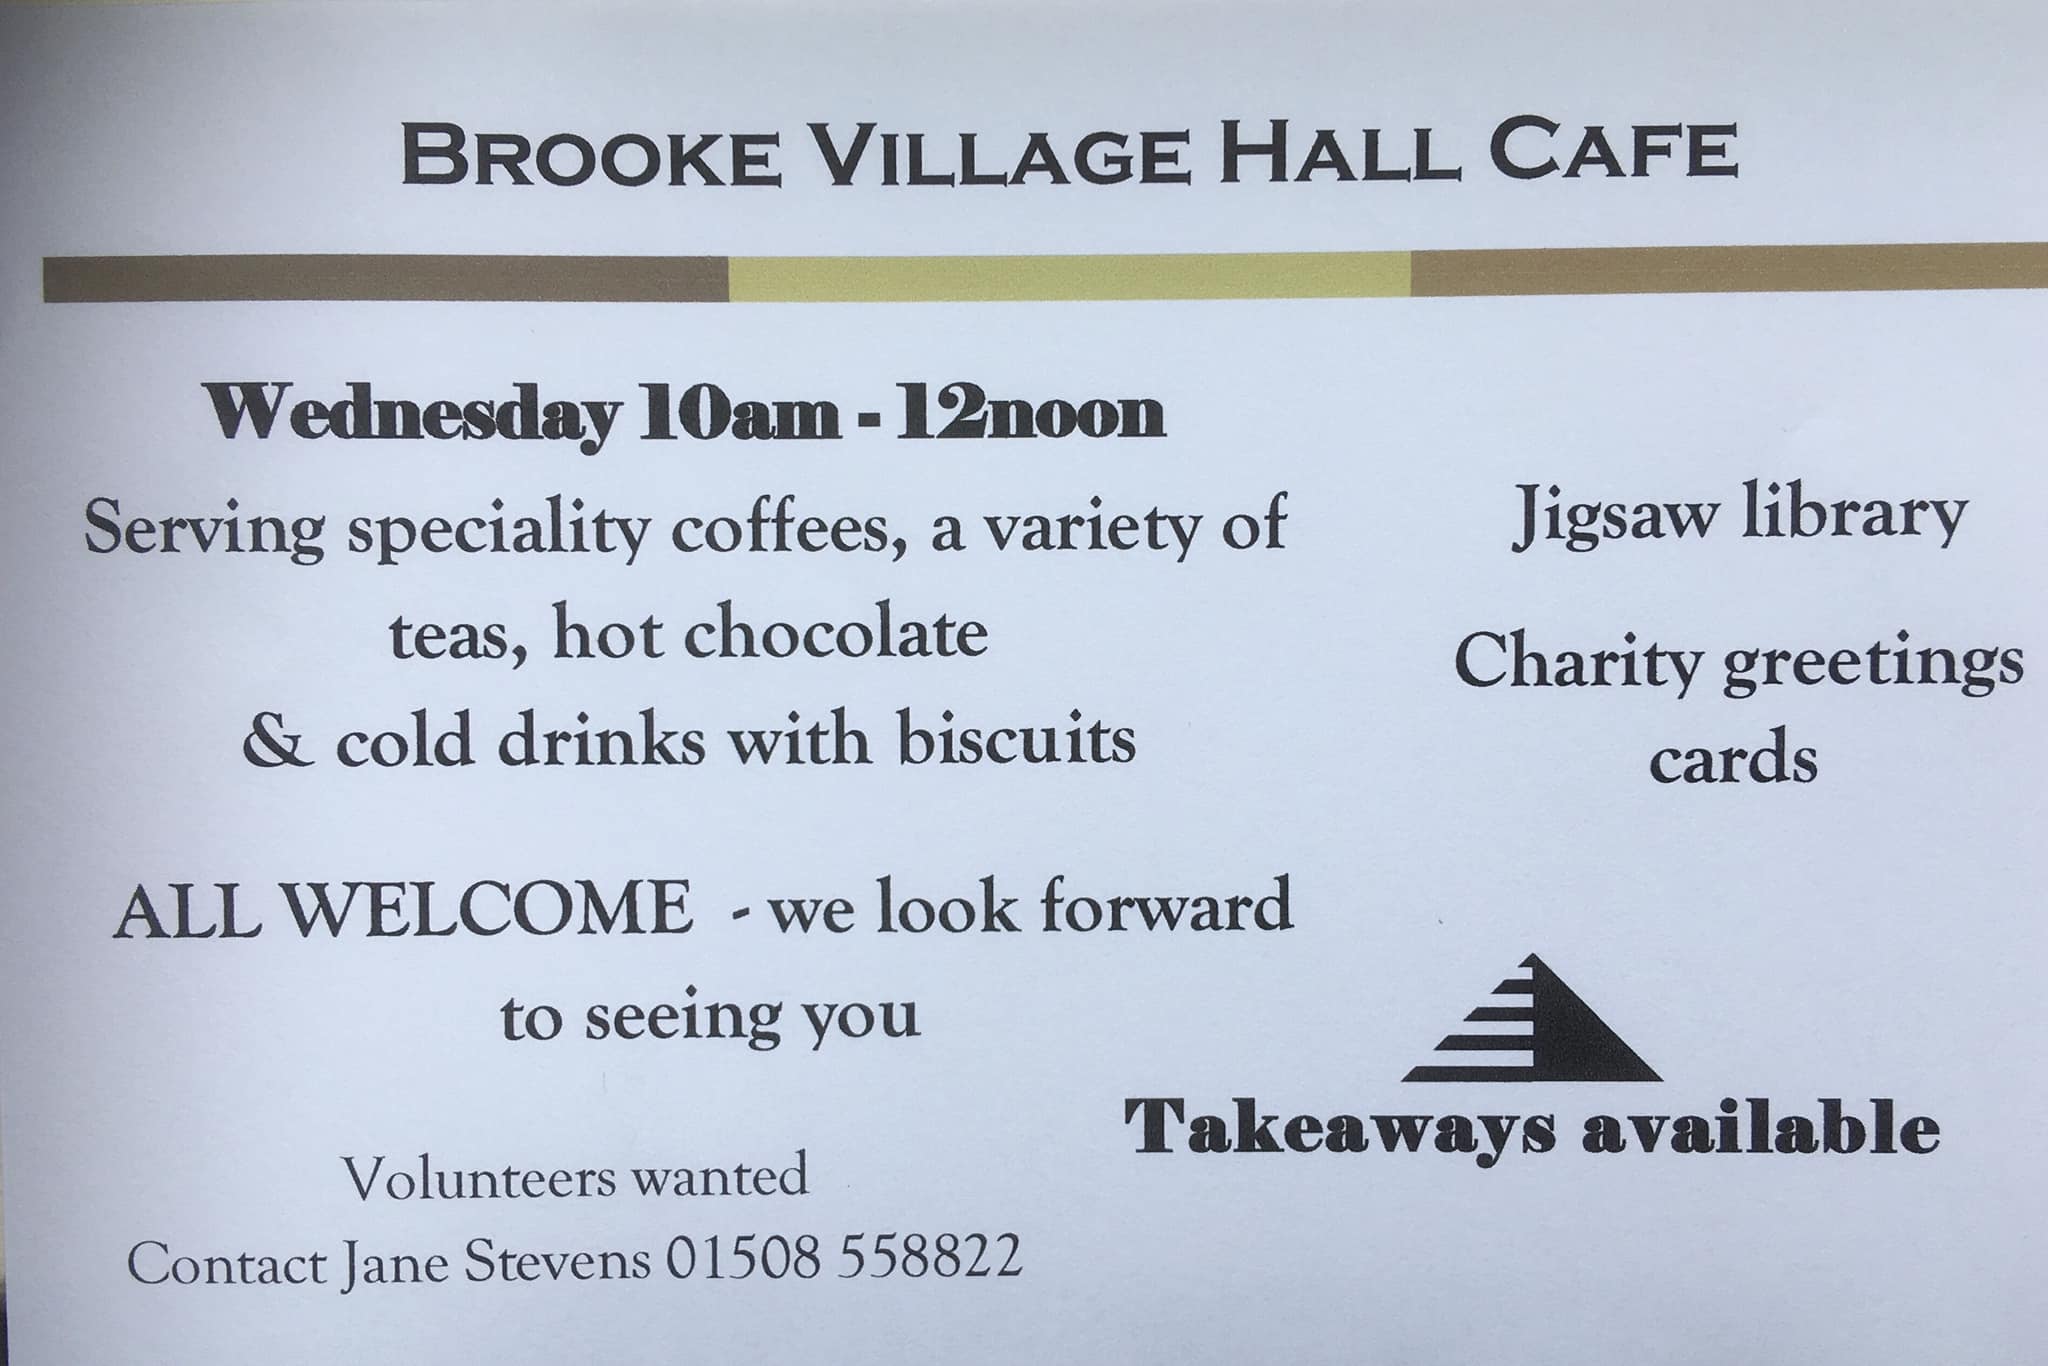 Brooke Village Hall Café – Every Wednesday